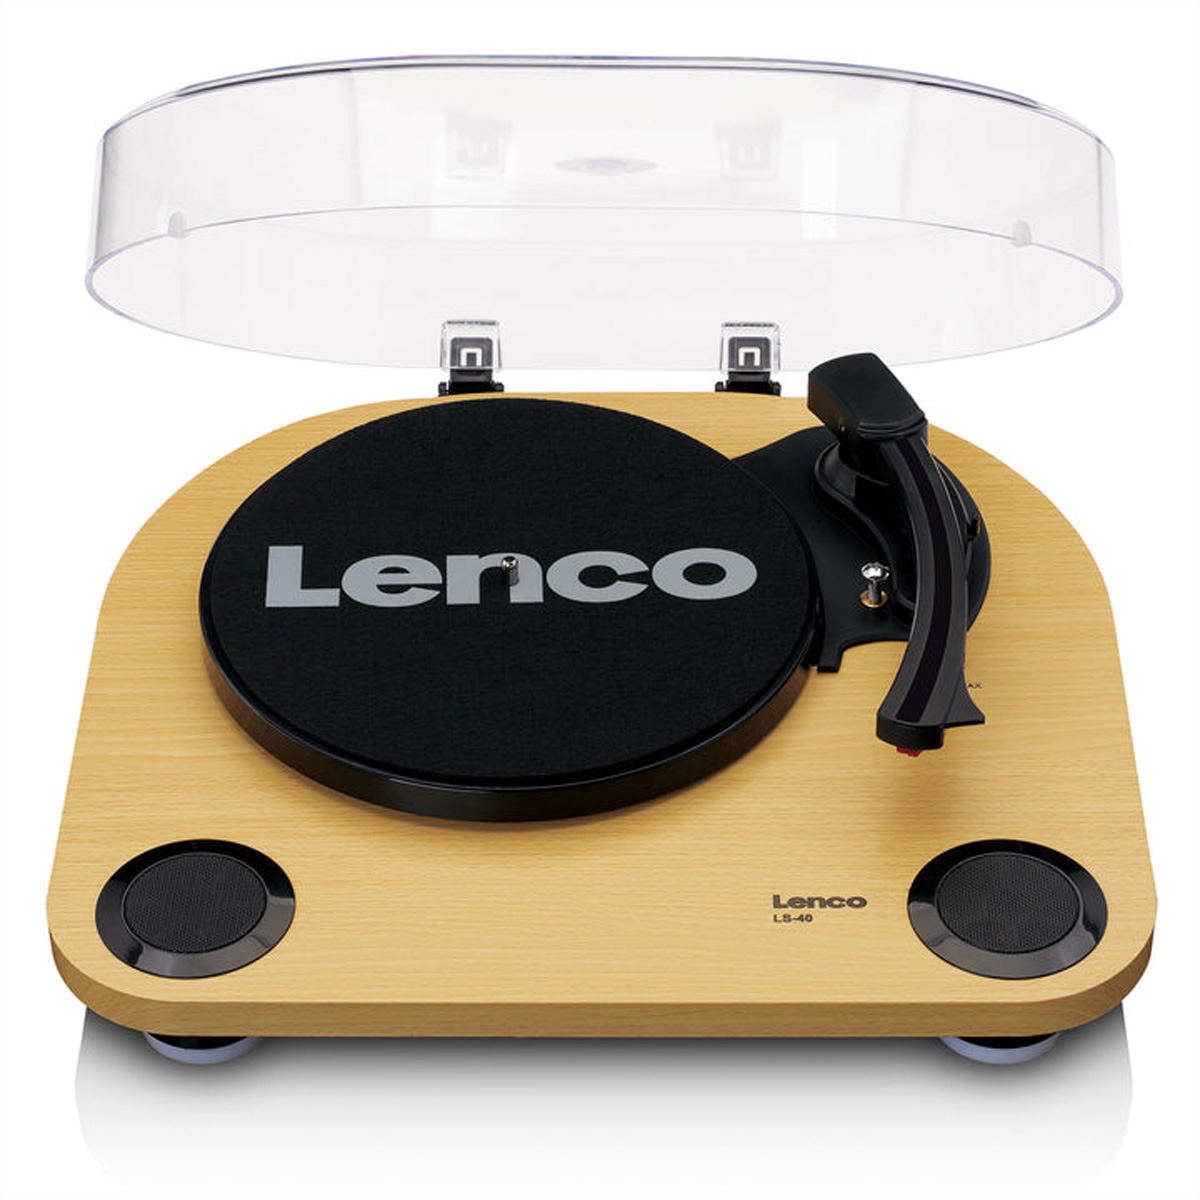 Lenco Plattenspieler, LS-40WD, braun, Lautsprecher 6 Watt, 33,45 U/min